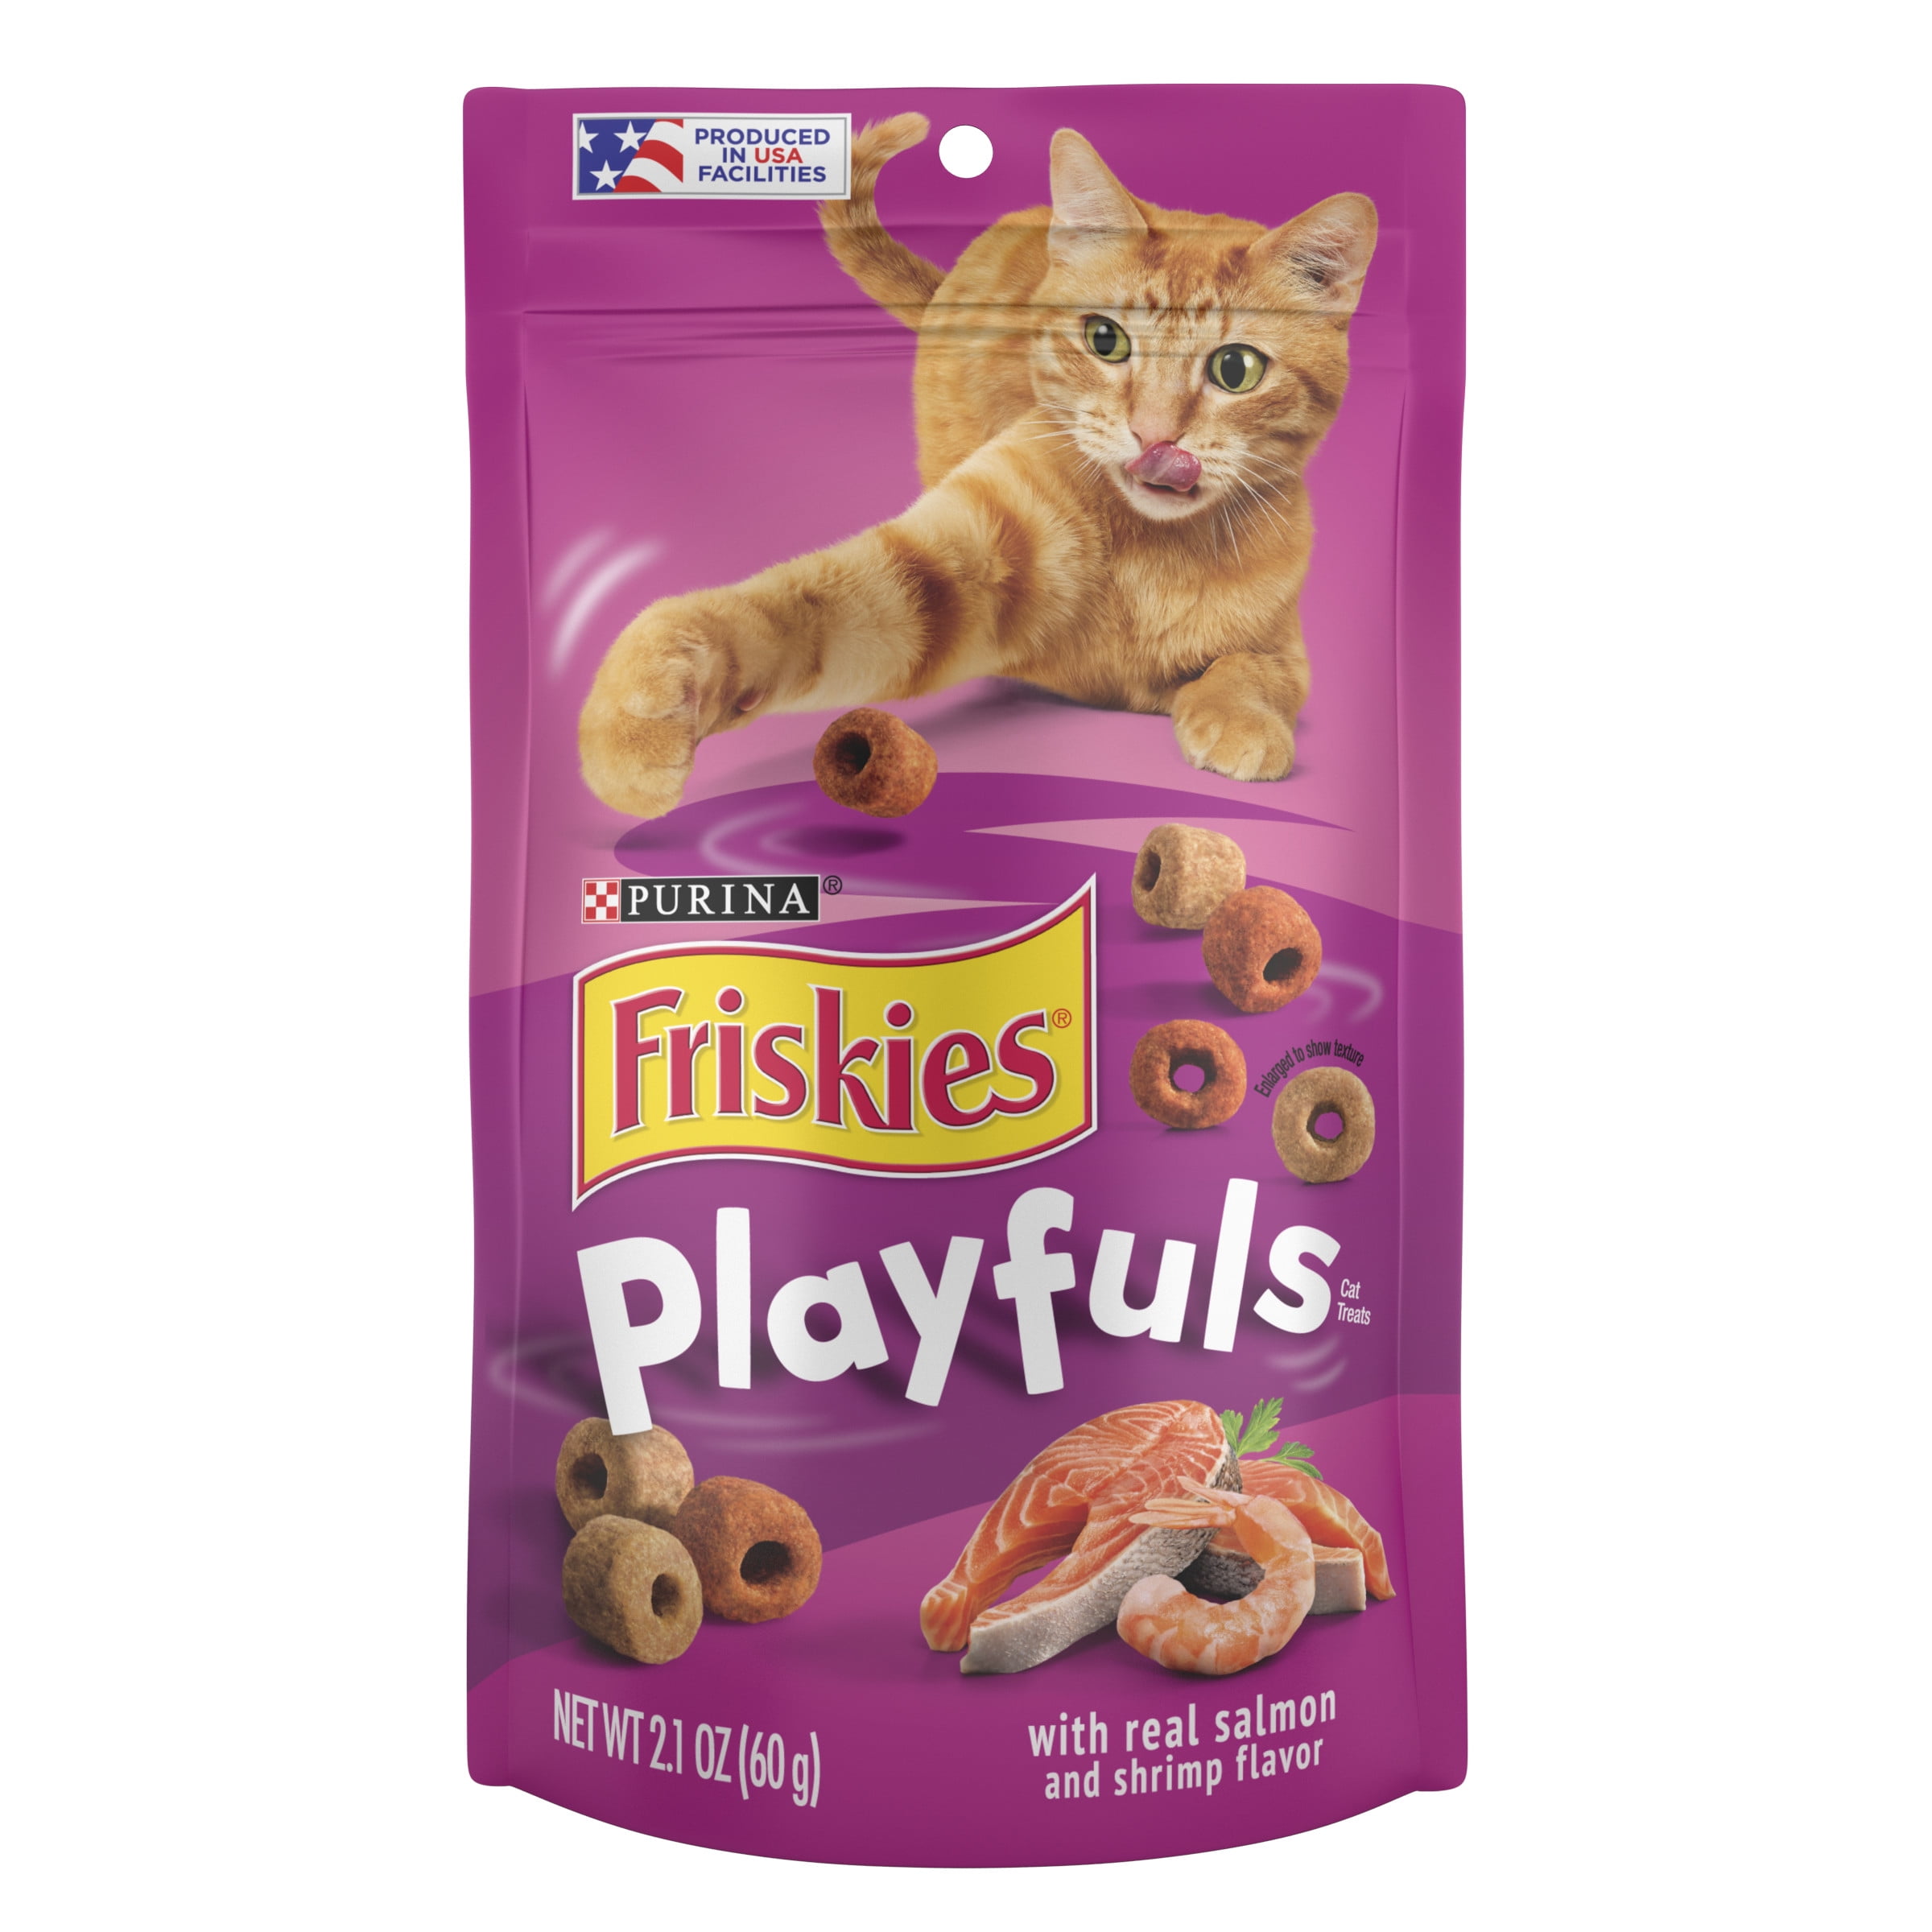 Purina Friskies Playfuls Salmon & Shrimp Flavor Treats for Cats, 2.1 oz Pouch